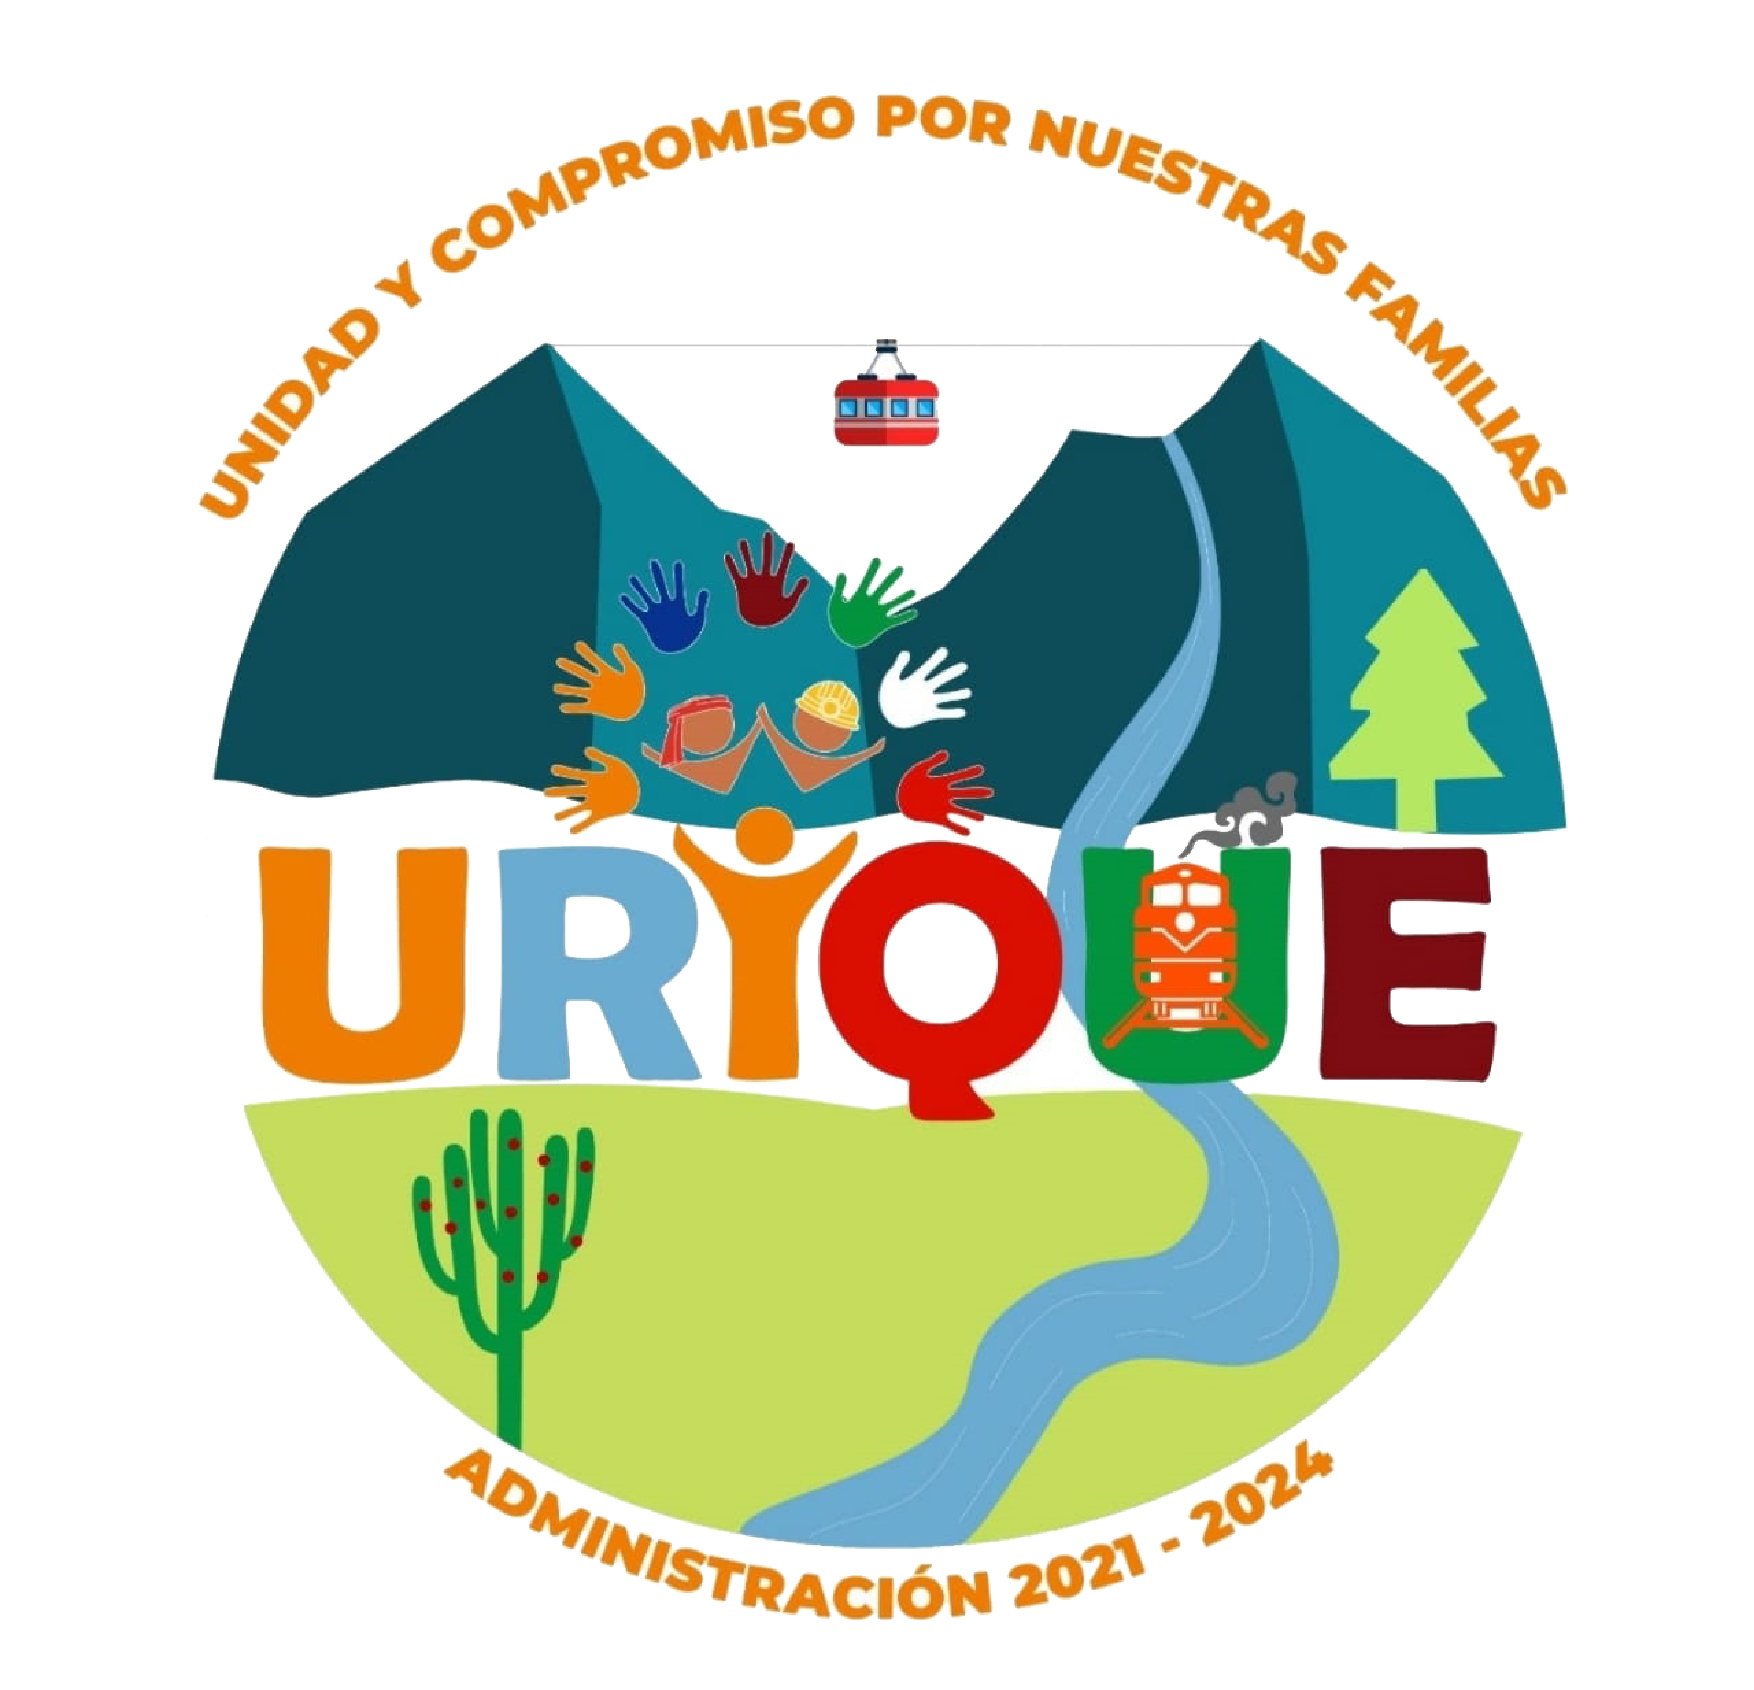 Urique admin logo.jpg